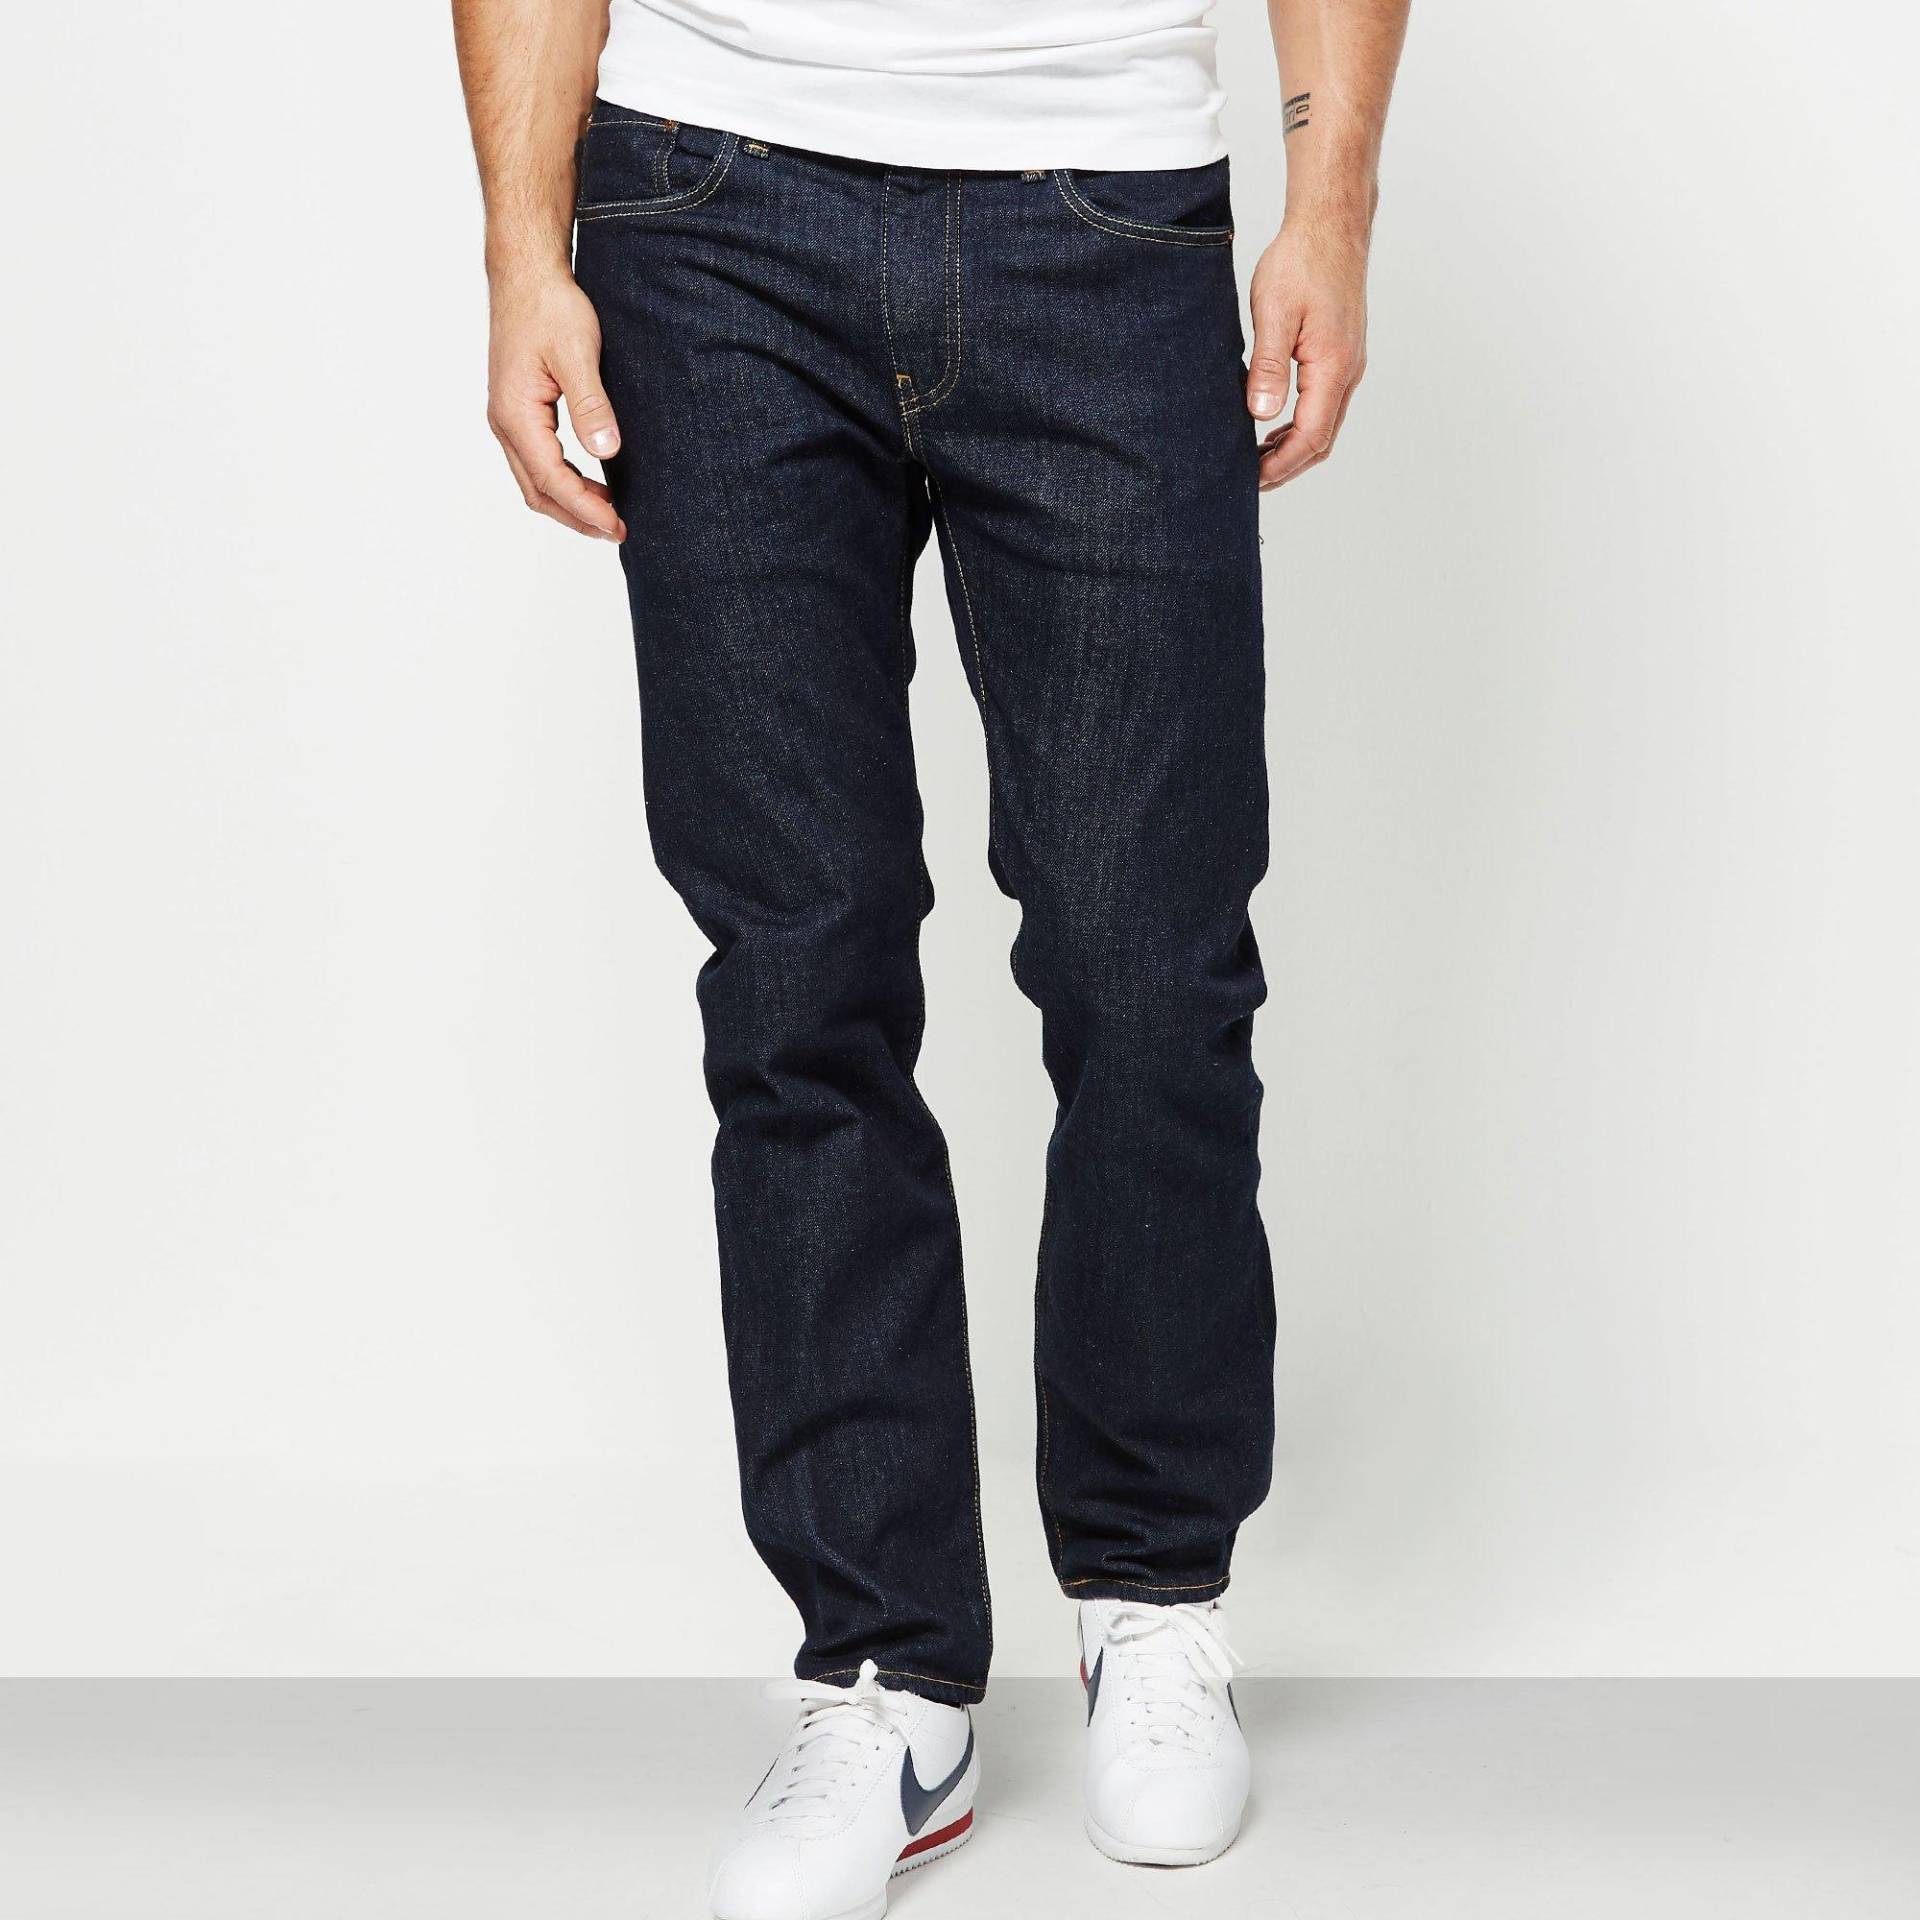 Jeans, Straight Leg Fit Herren Blau Denim Dunkel L32/W38 von Levi's®